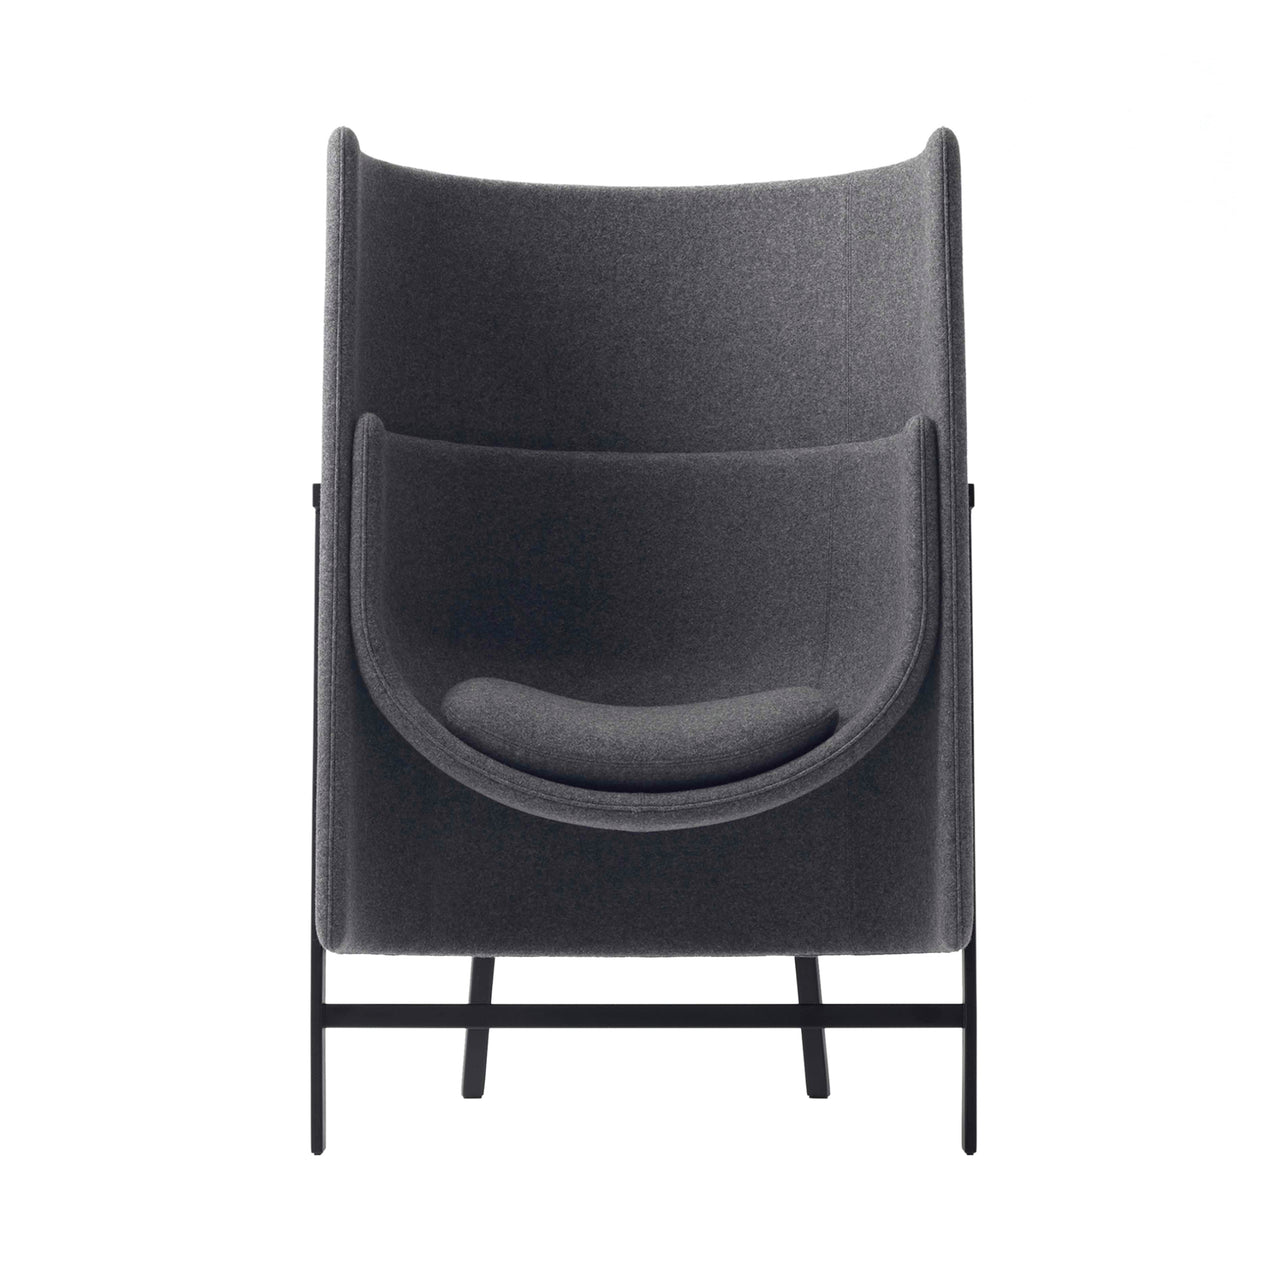 Kite Highback Chair: Narrow